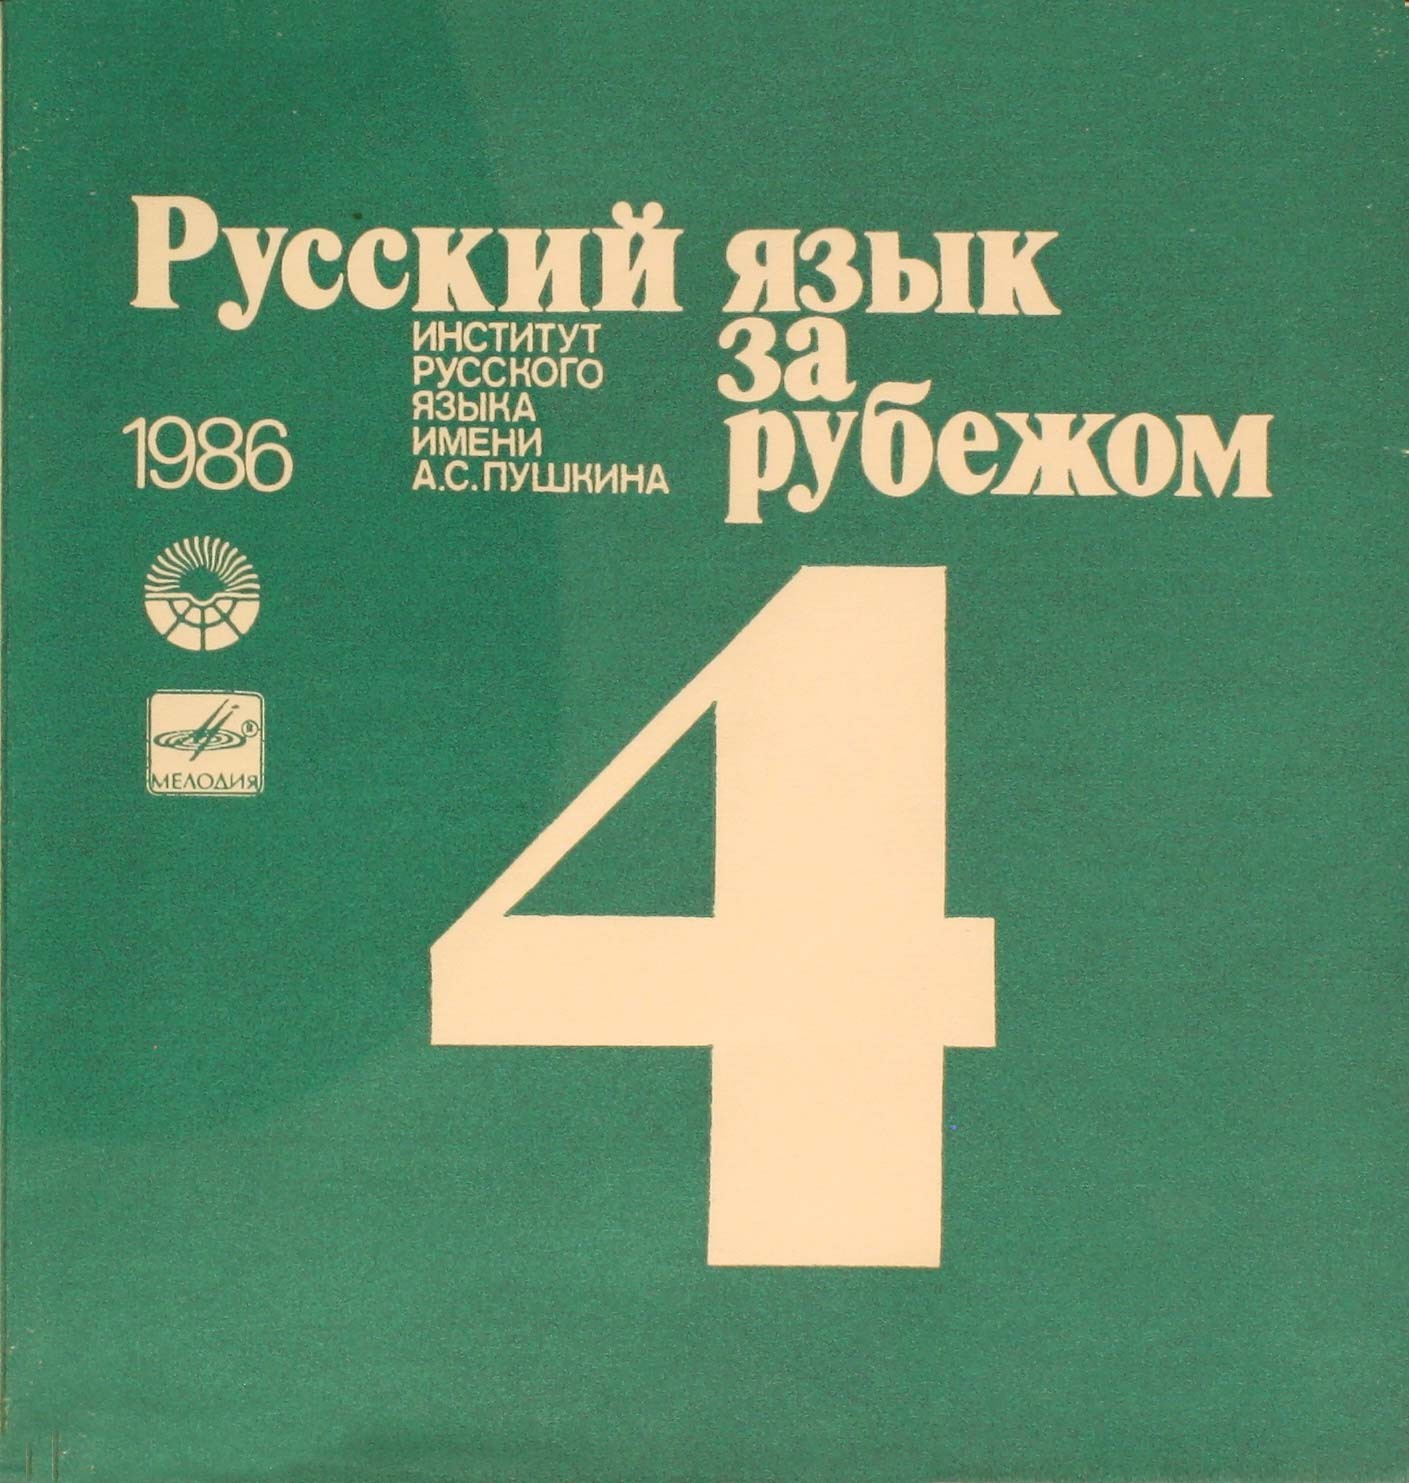 "РУССКИЙ ЯЗЫК ЗА РУБЕЖОМ", № 4 - 1986